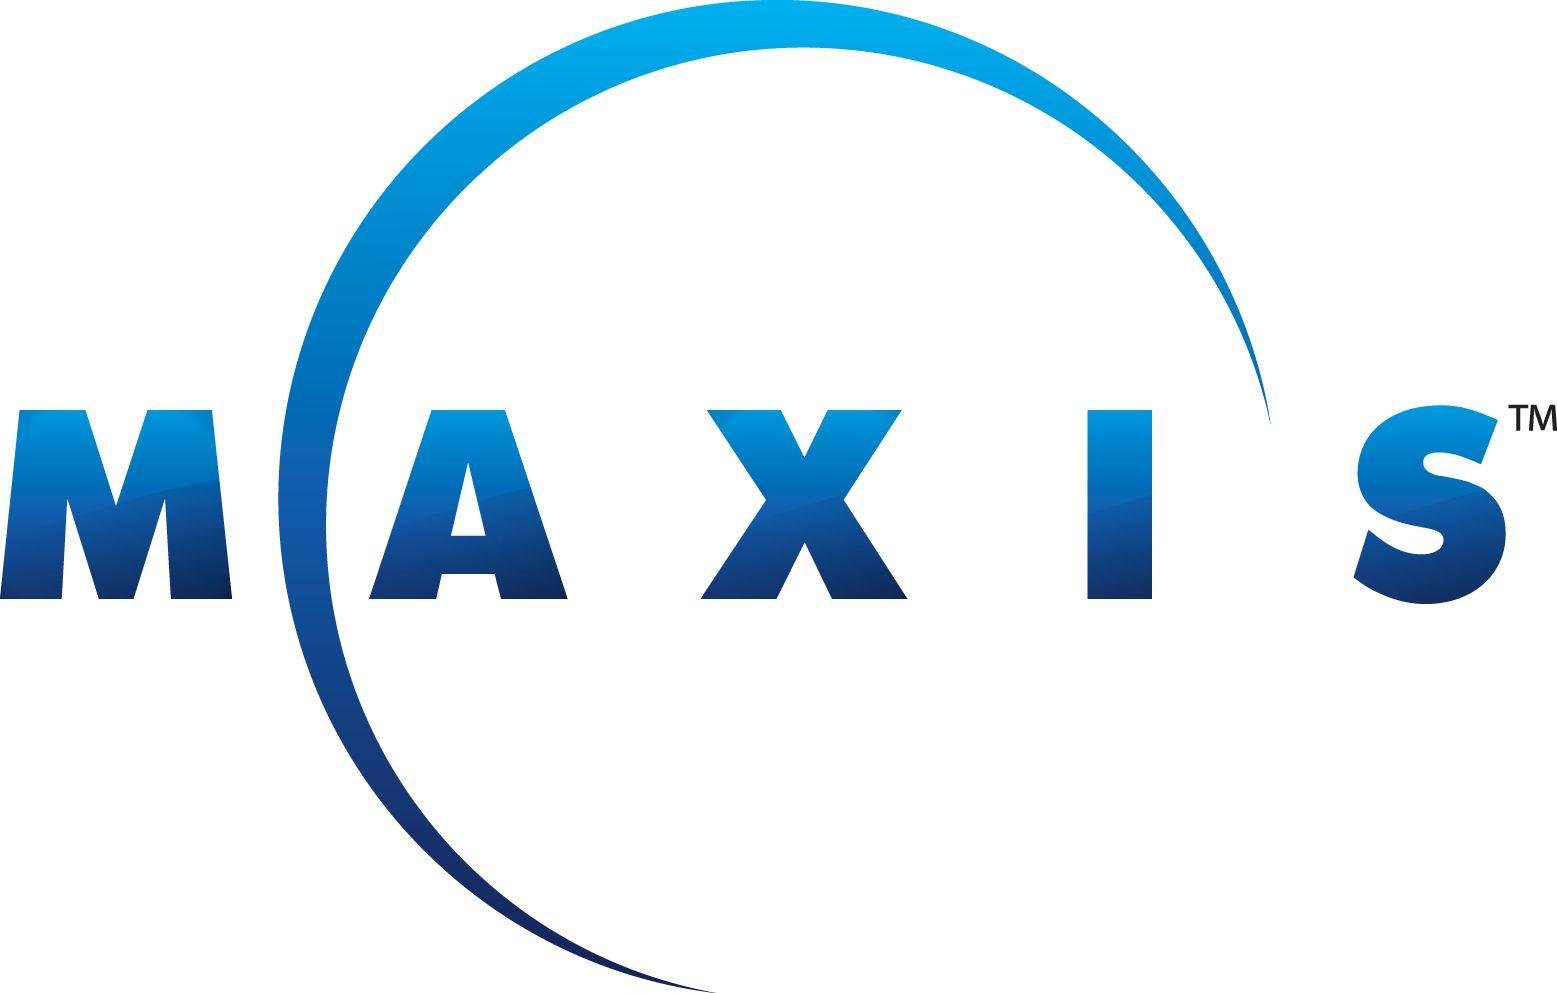 Maxis Logo - Image - Maxis Logo.jpg | Logopedia | FANDOM powered by Wikia